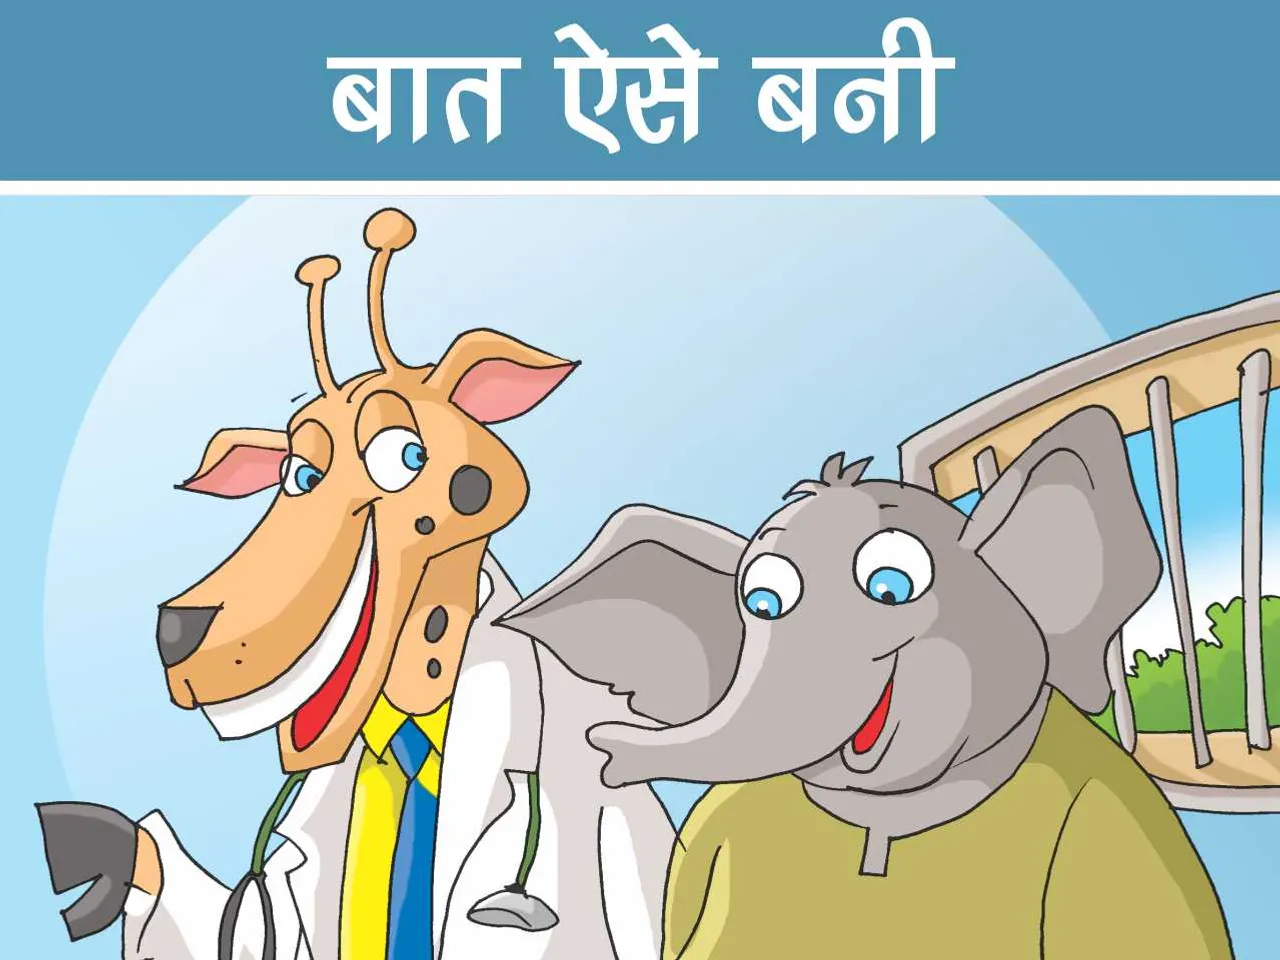 Girrafe and elephant cartoon image